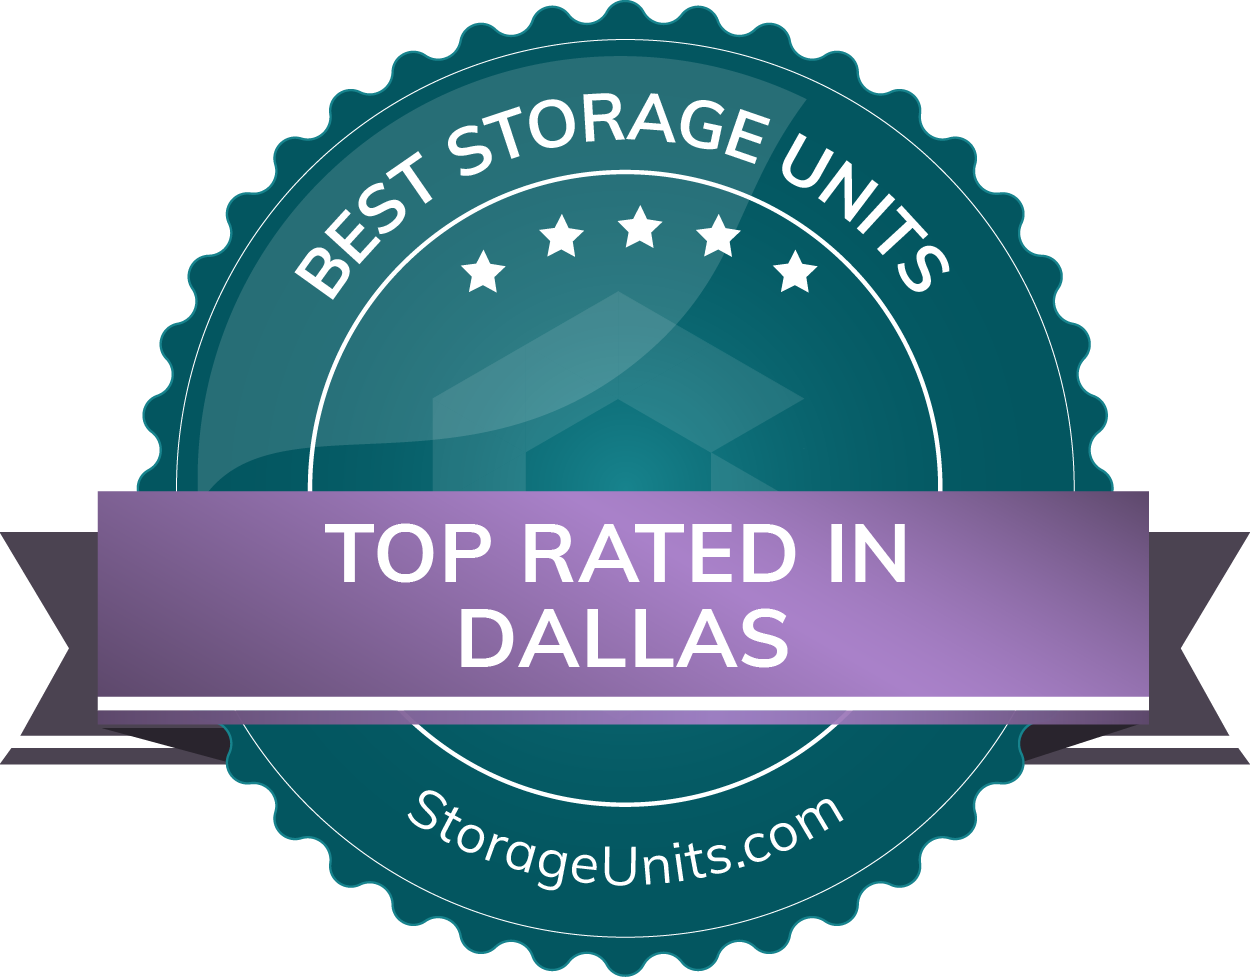 Best Self Storage Units in Dallas, Texas of 2022